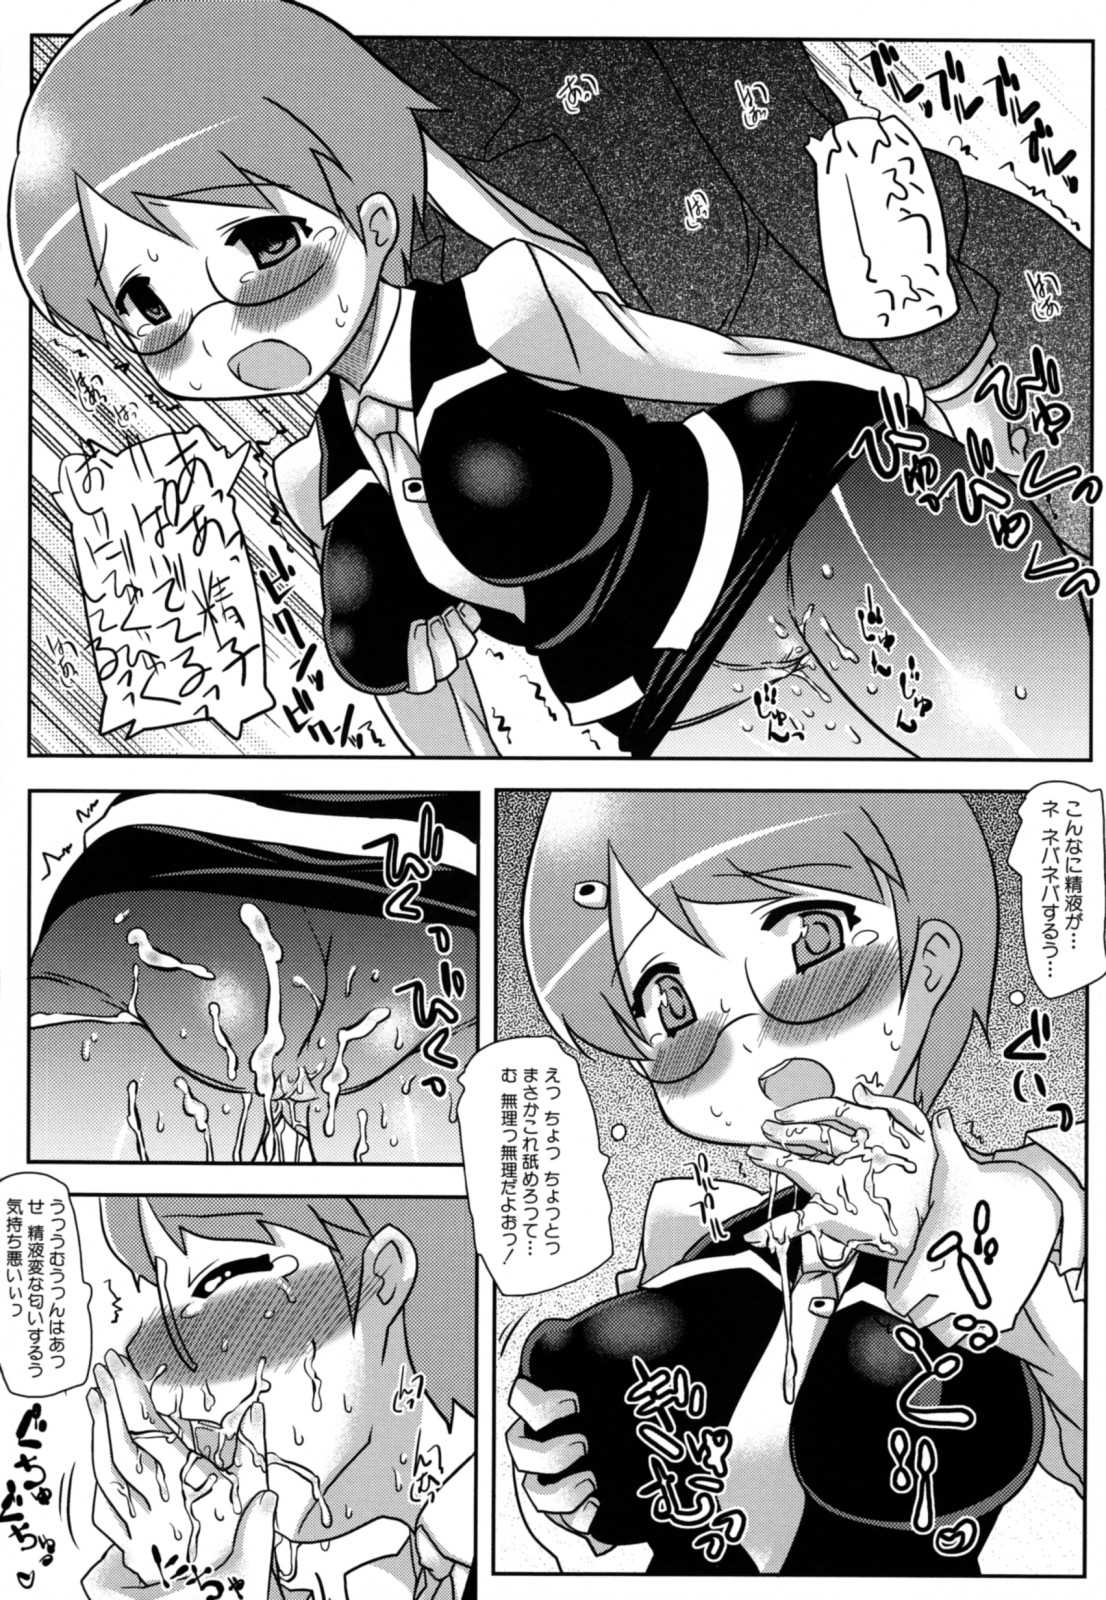 (Adult Manga) [Hirokazu Haba] Chiu Pet [2008-03-05] 